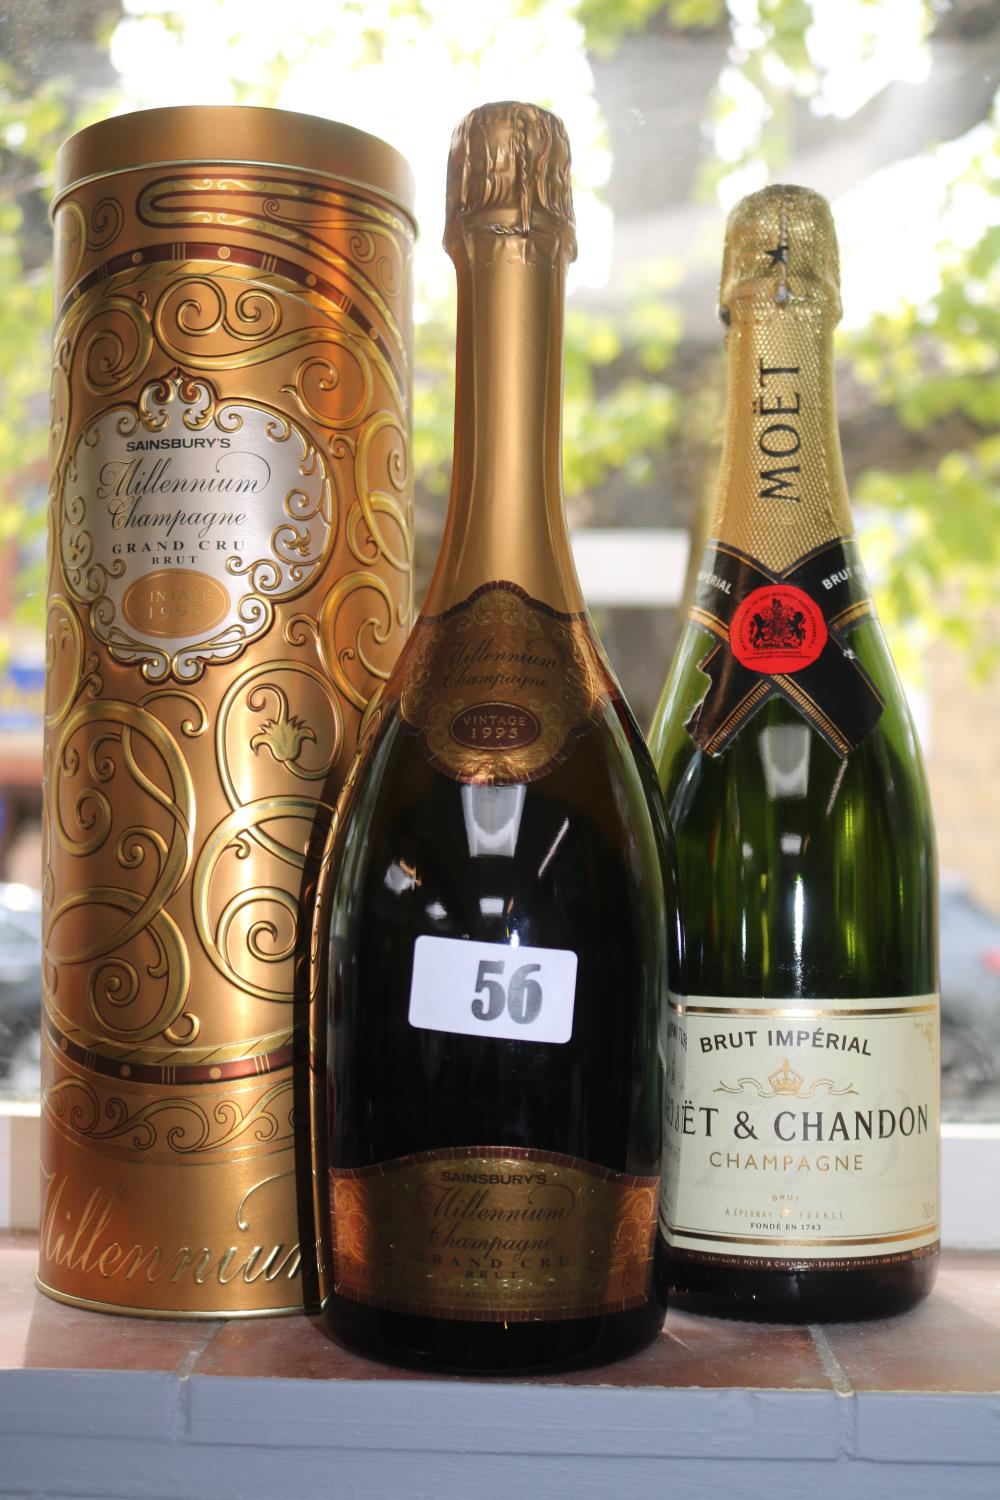 Bottle of Moet & Chandon 750ml and a Cased Bottle of 1995 Vintage Champagne